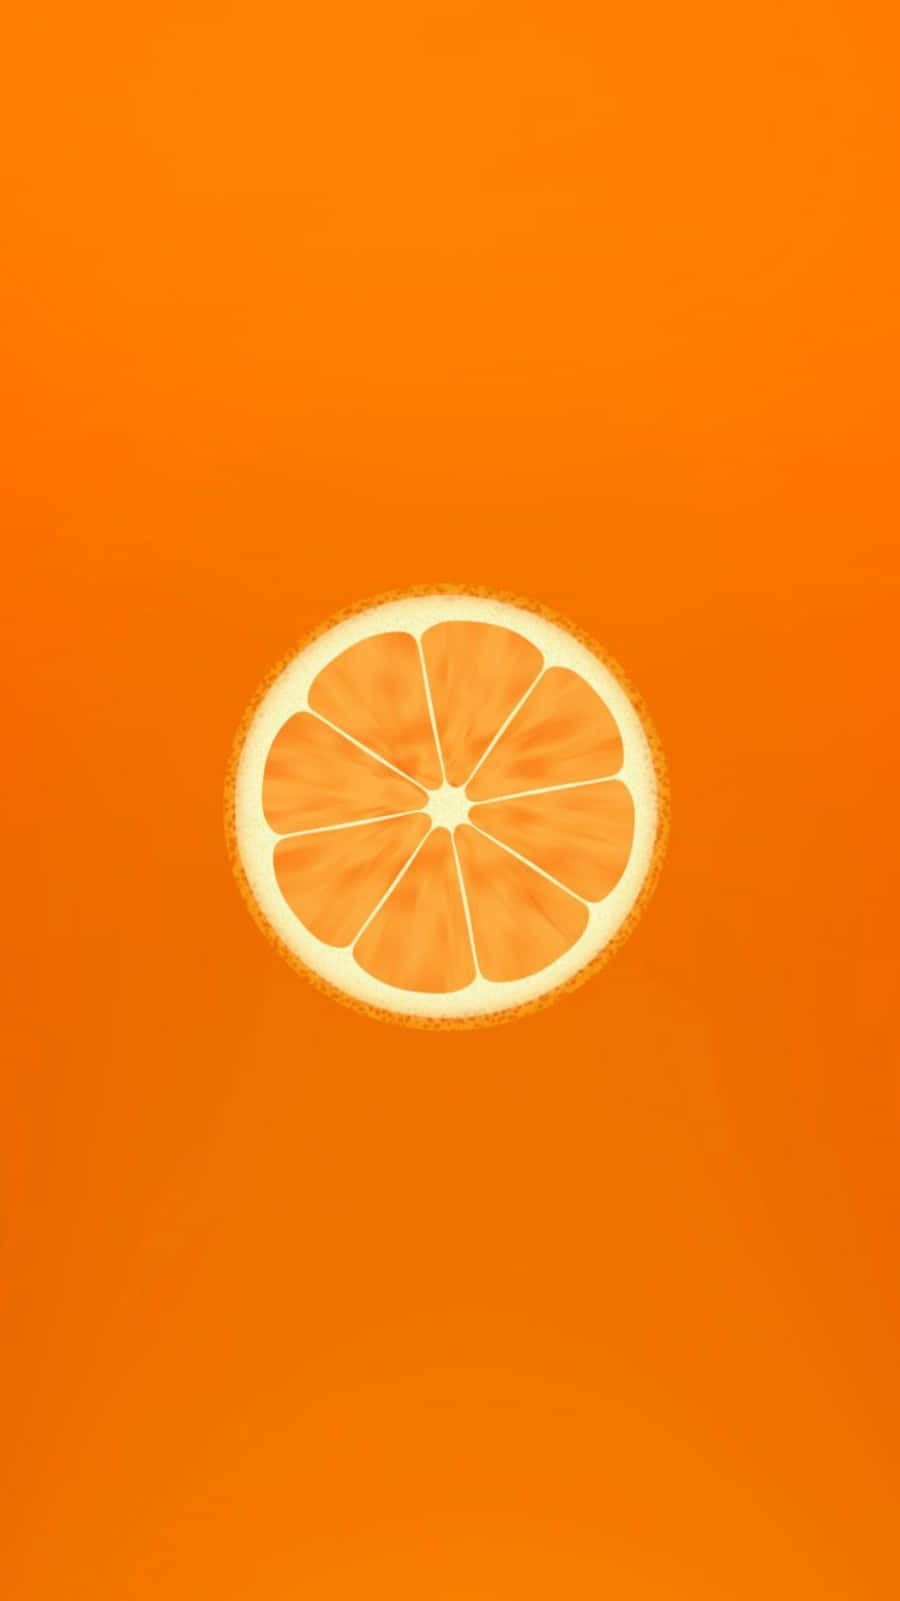 Cute Orange Slice Digital Art Background